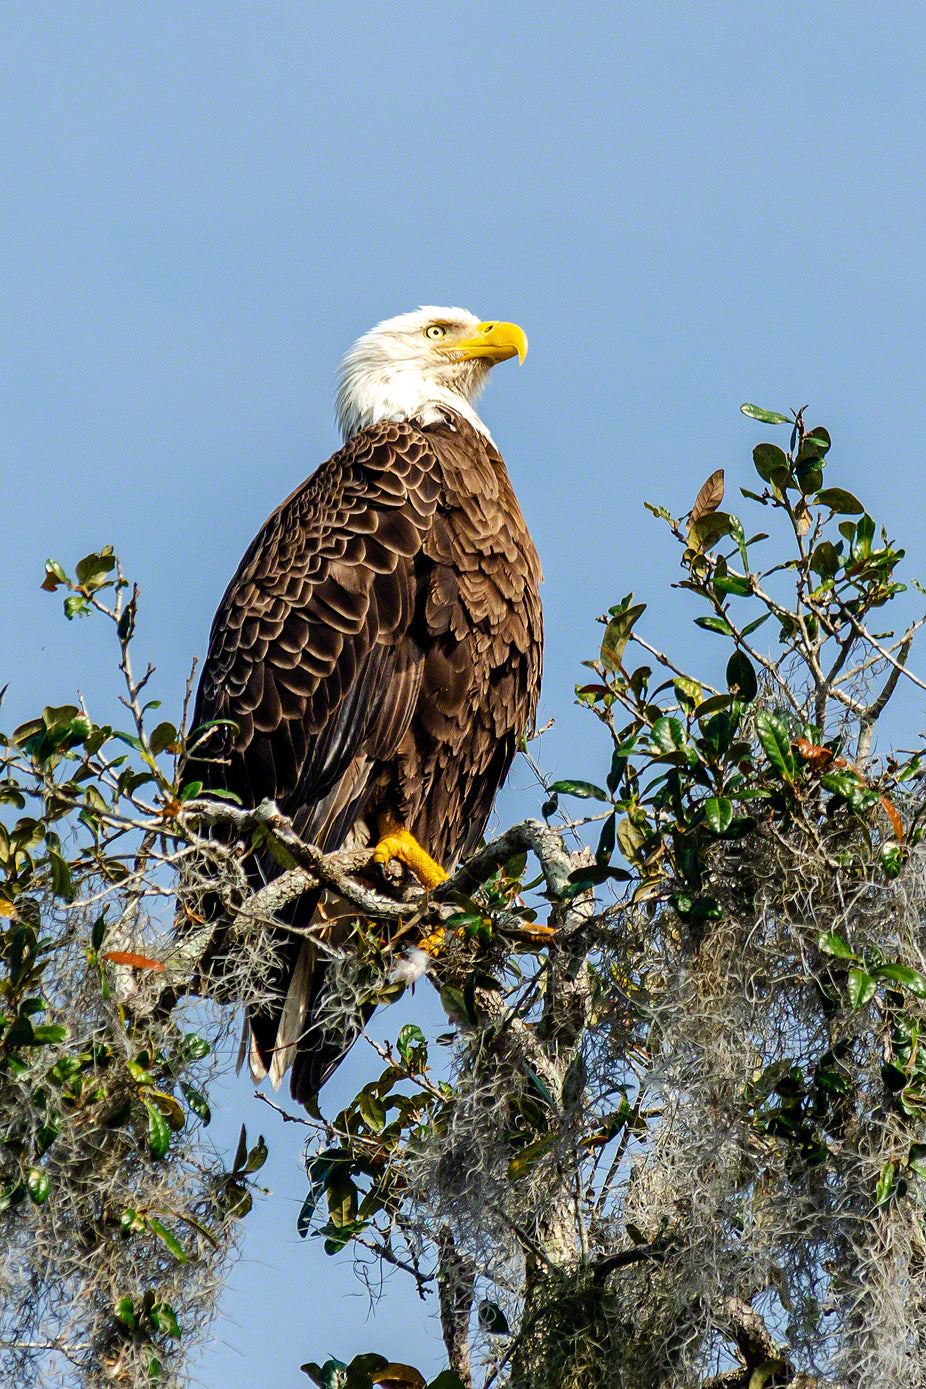 A photo of an American Bald Eagle